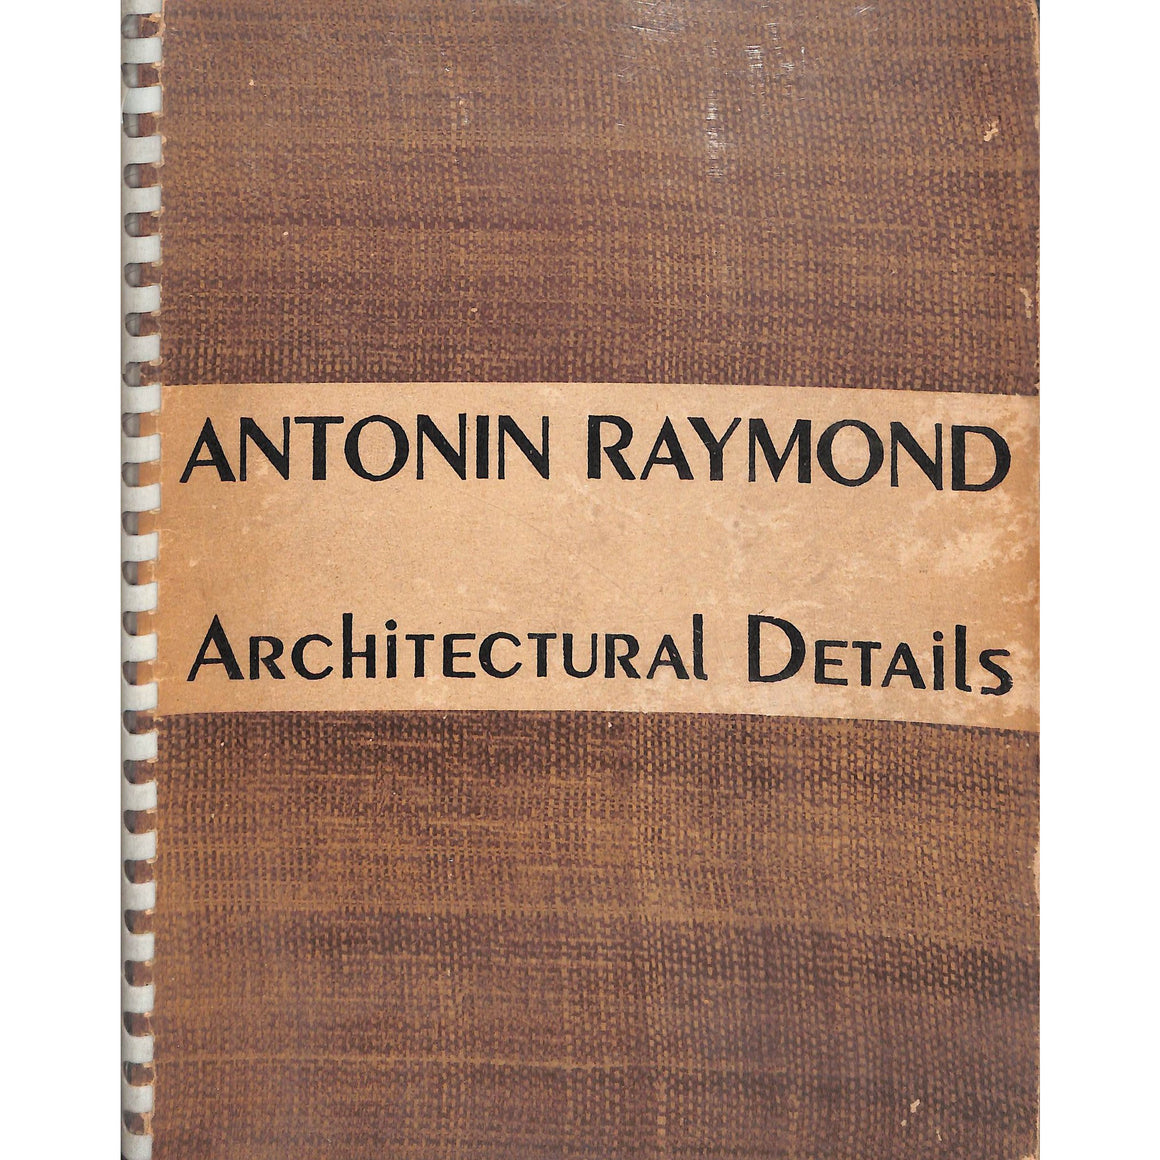 Antonin Raymond: Architectural Details